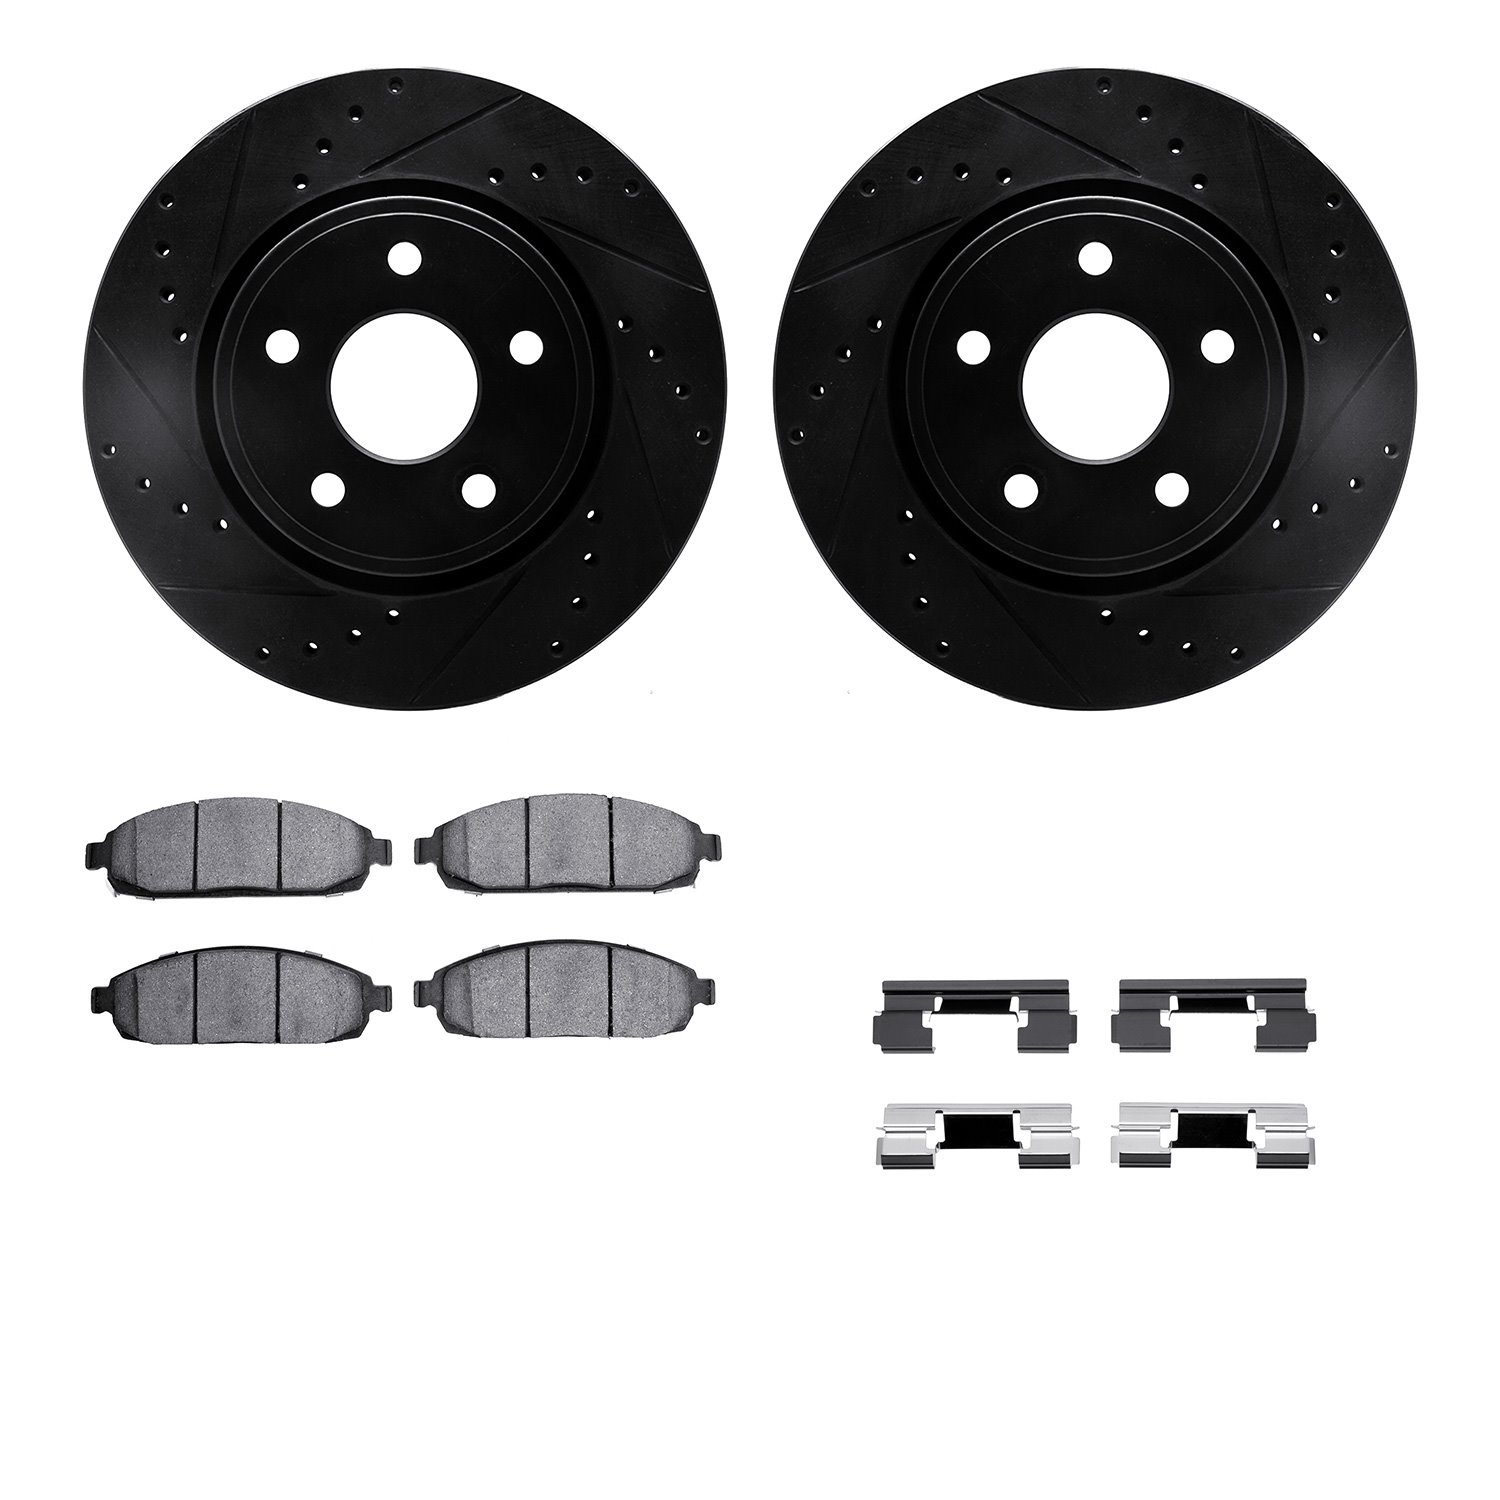 8412-42001 Drilled/Slotted Brake Rotors with Ultimate-Duty Brake Pads Kit & Hardware [Black], 2005-2010 Mopar, Position: Front